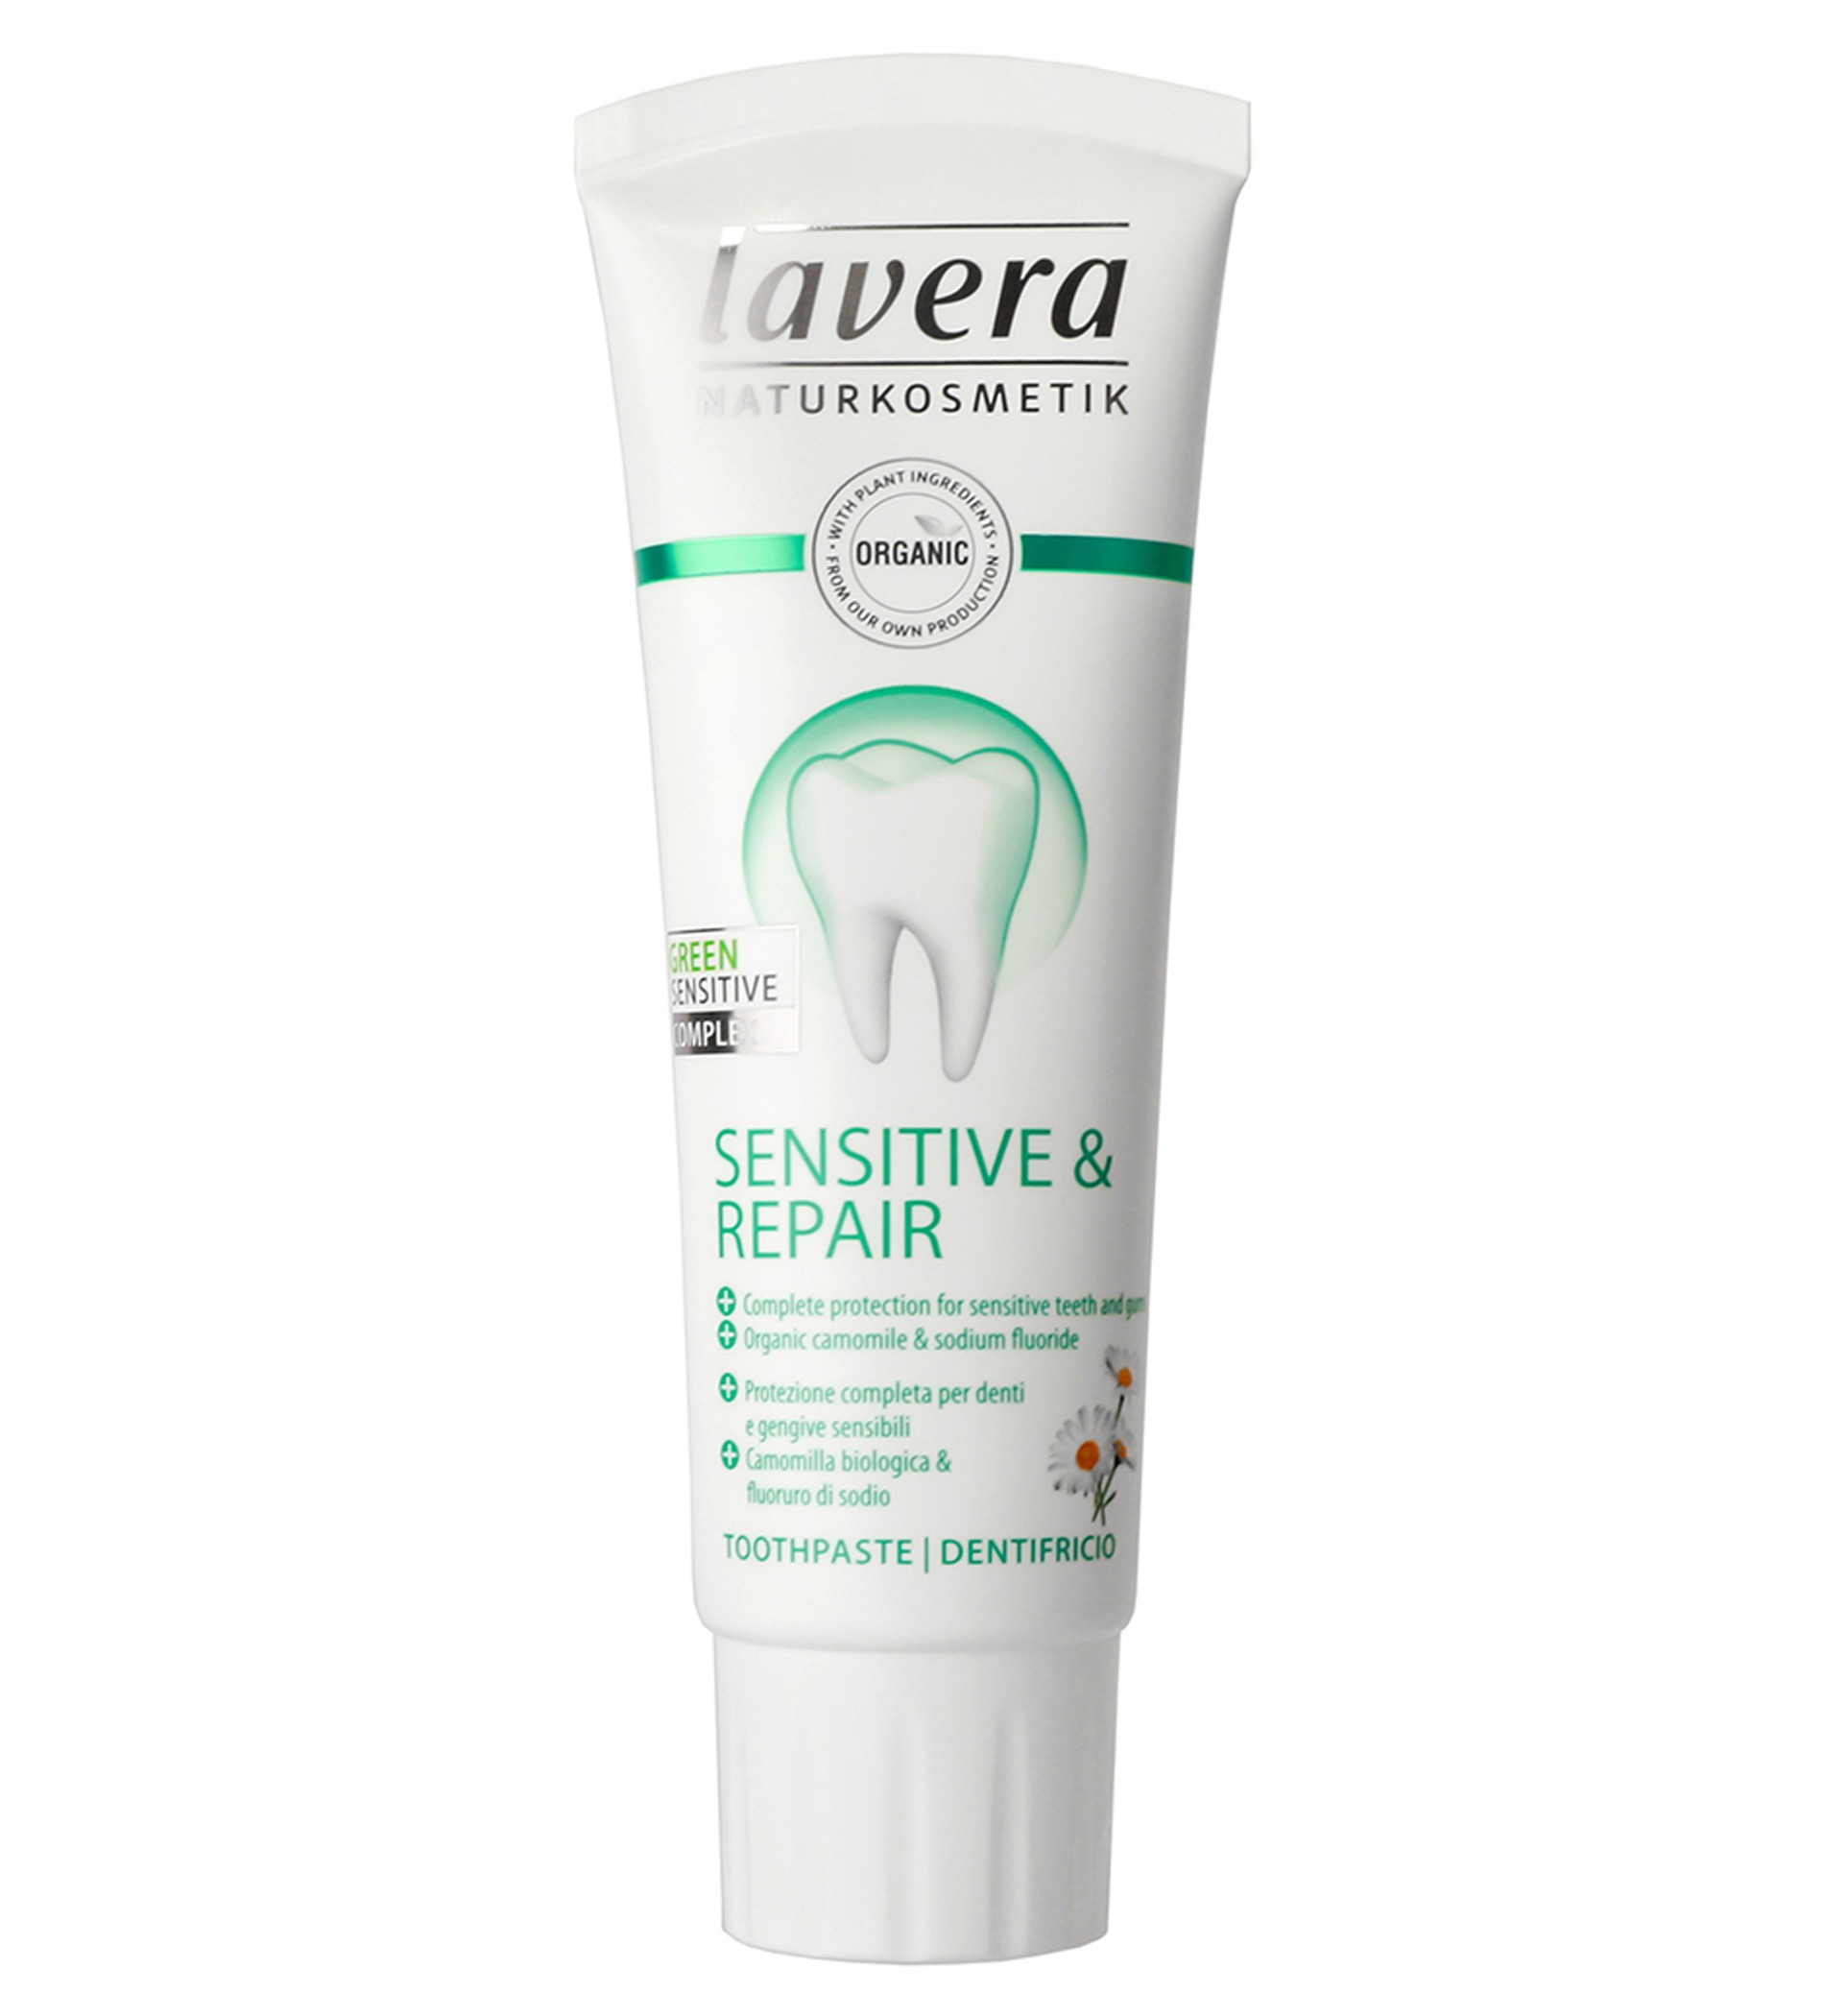 Lavera Senstive & Repair Toothpaste with Fluoride 